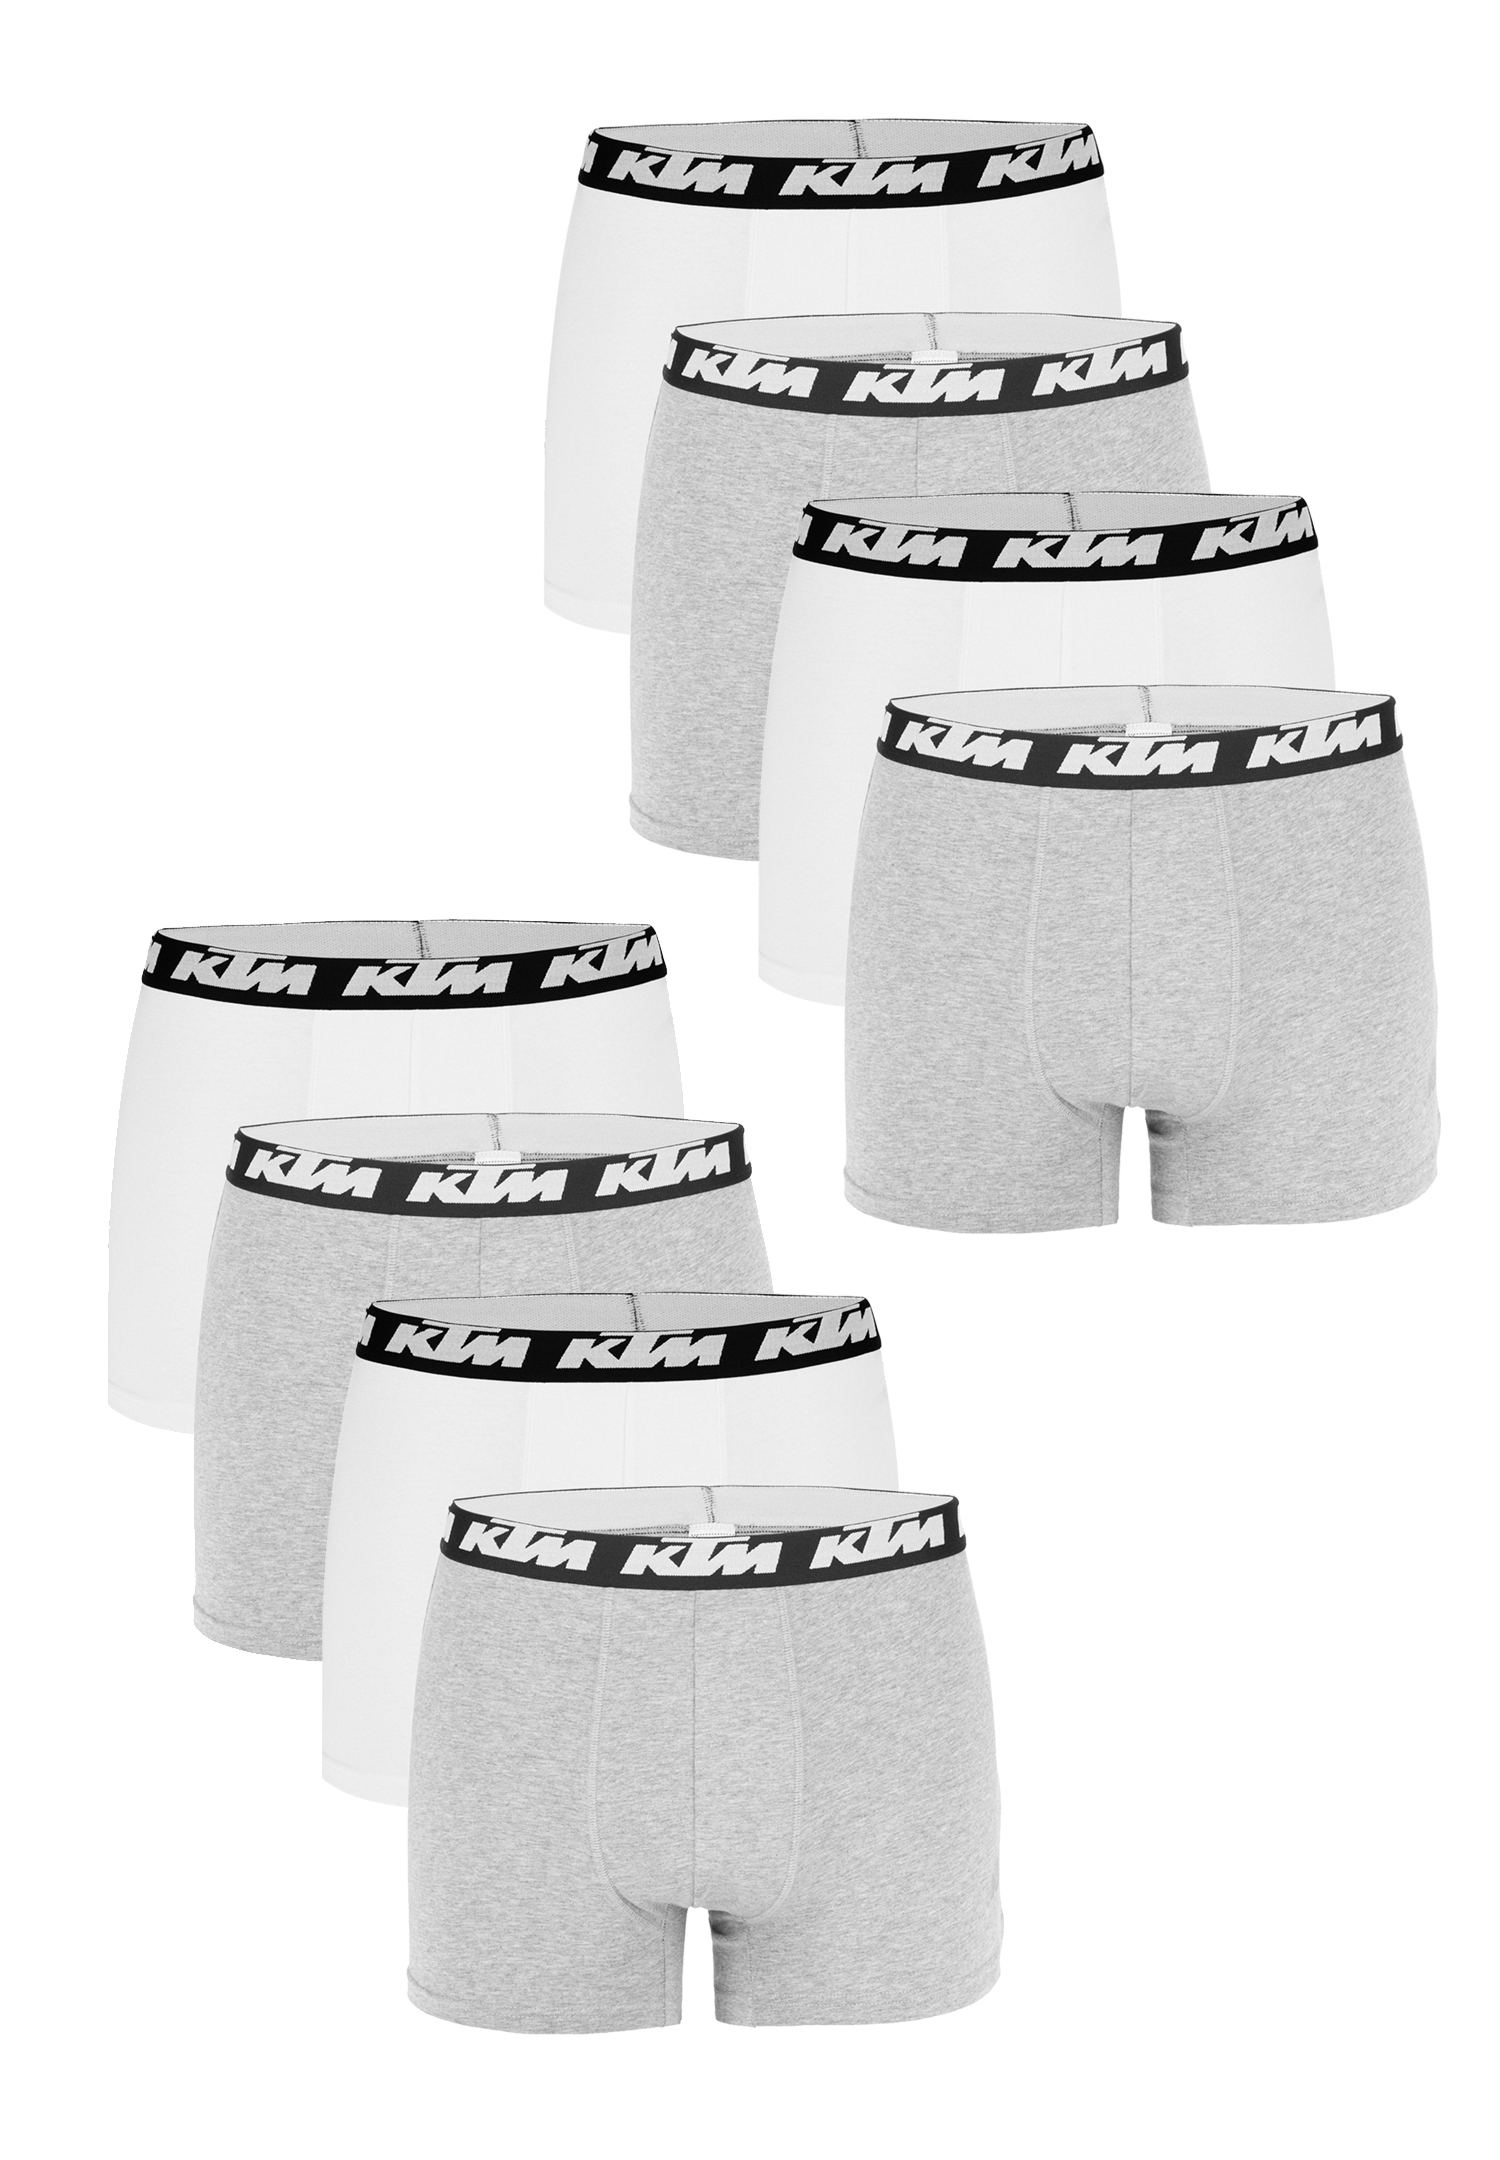 Боксеры KTM Boxershorts 8 шт, цвет Light Grey / White боксеры ktm s 8 шт man cotton цвет dark grey light grey